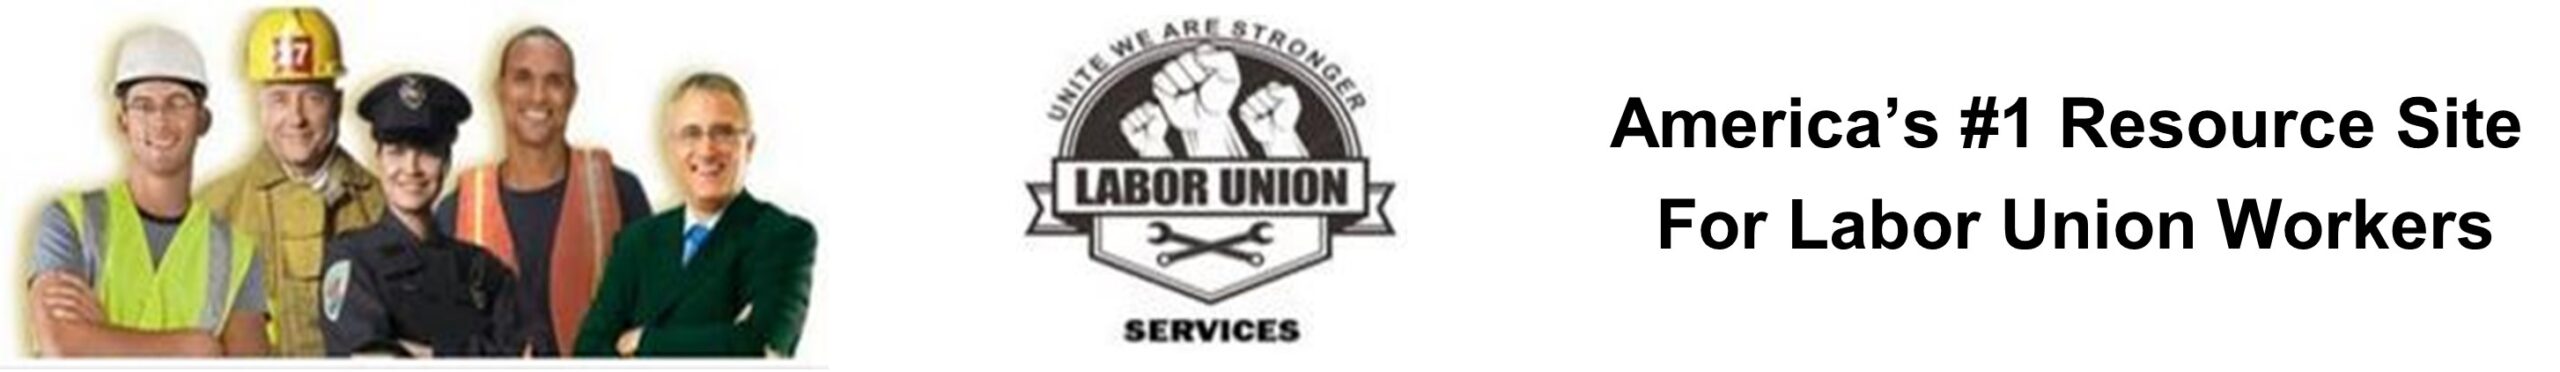 Labor Union Services 